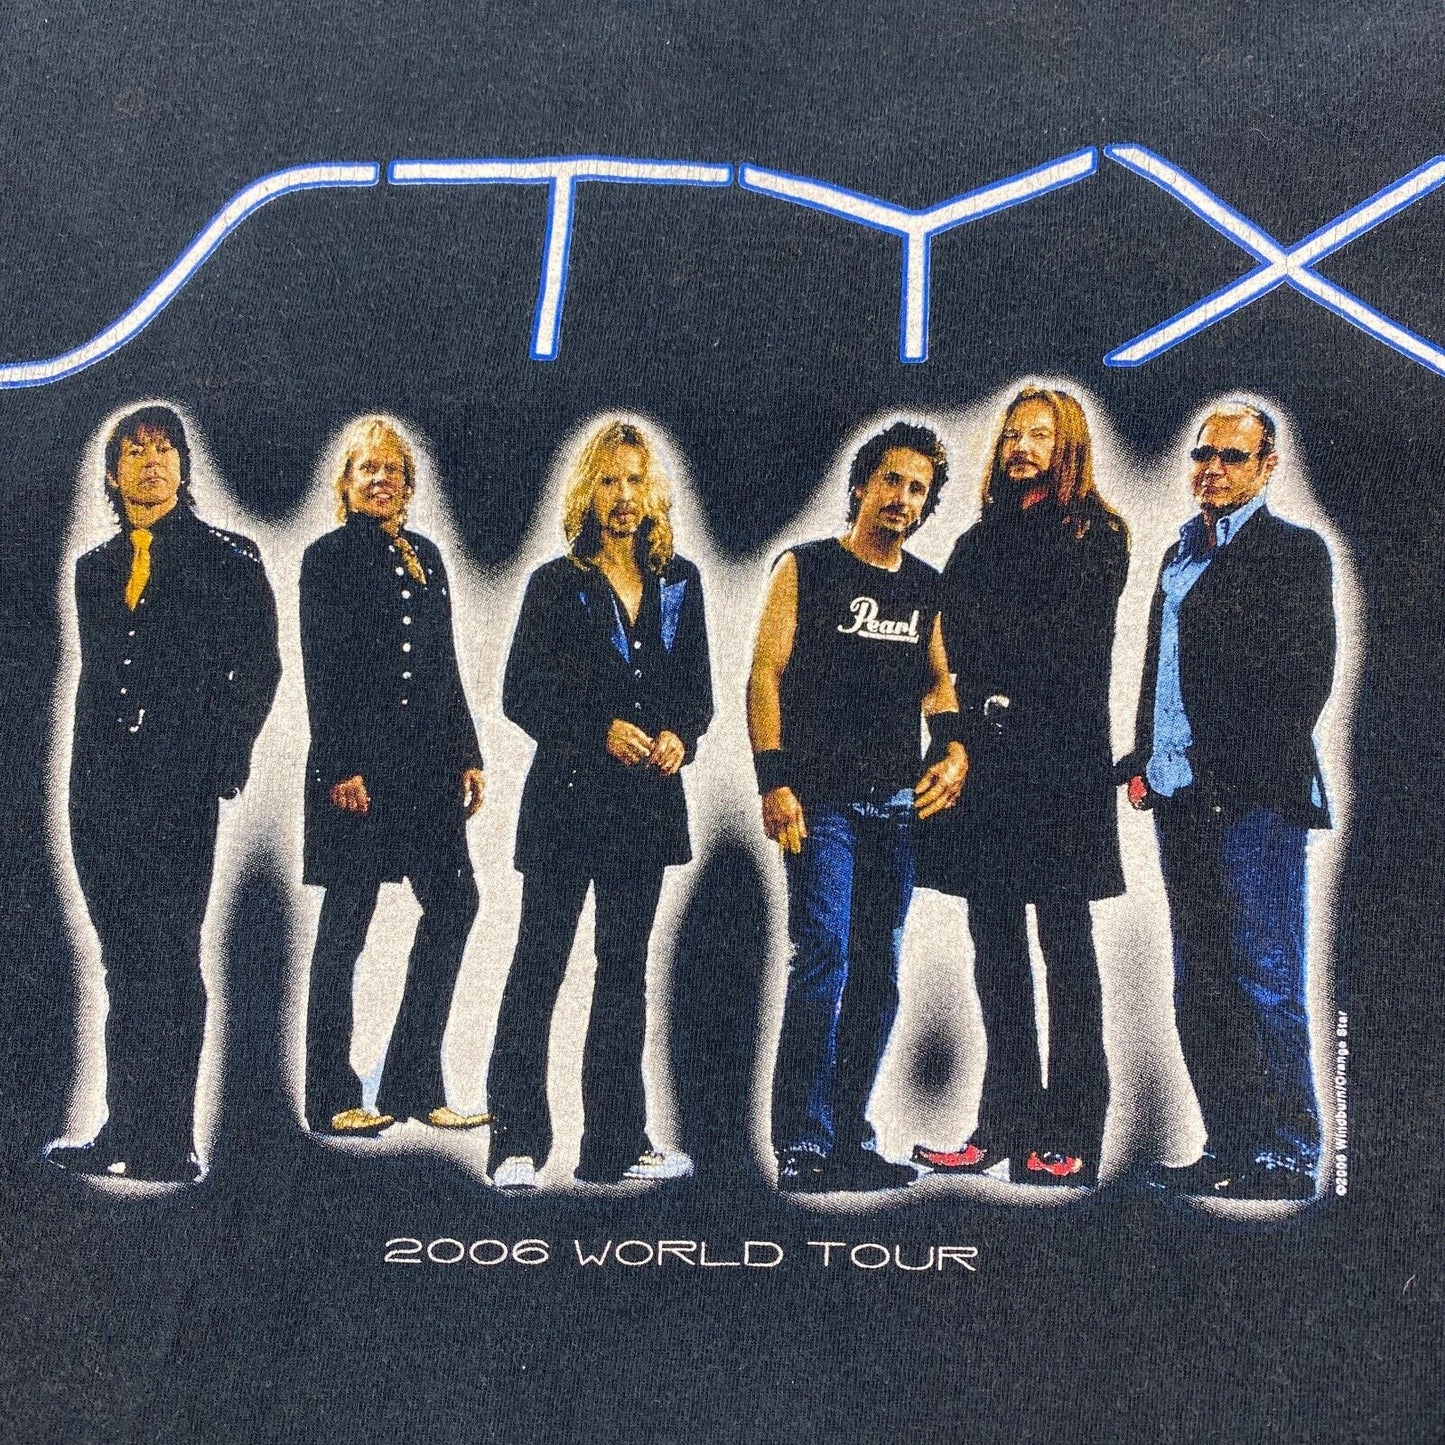 VINTAGE Styx World Tour Band T-Shirt sz Large Men